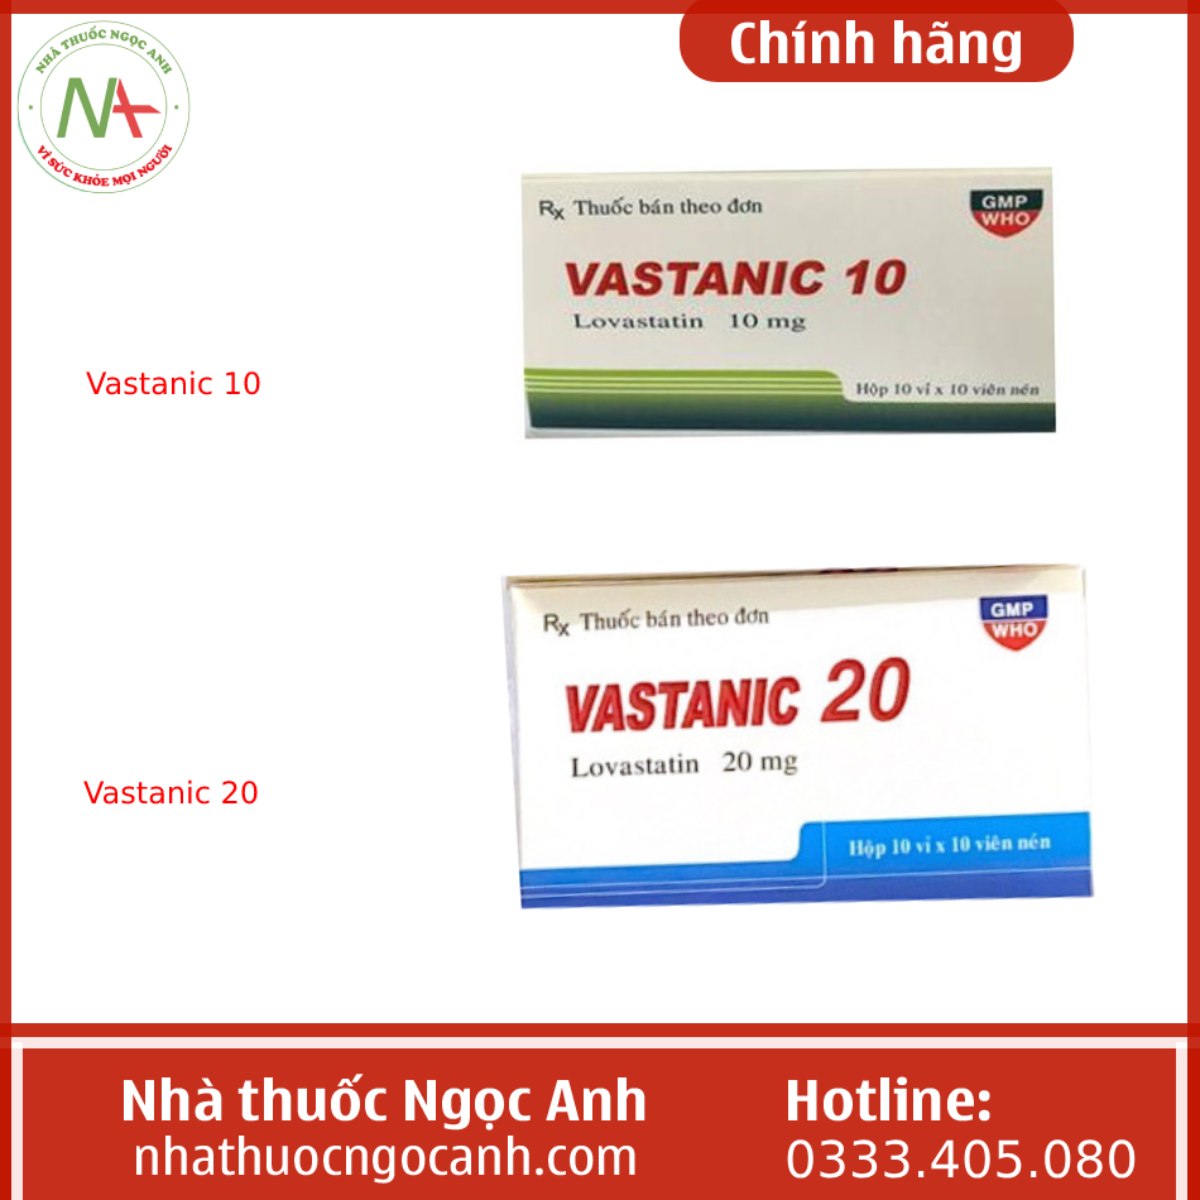 Vastanic 10 và Vastanic 20